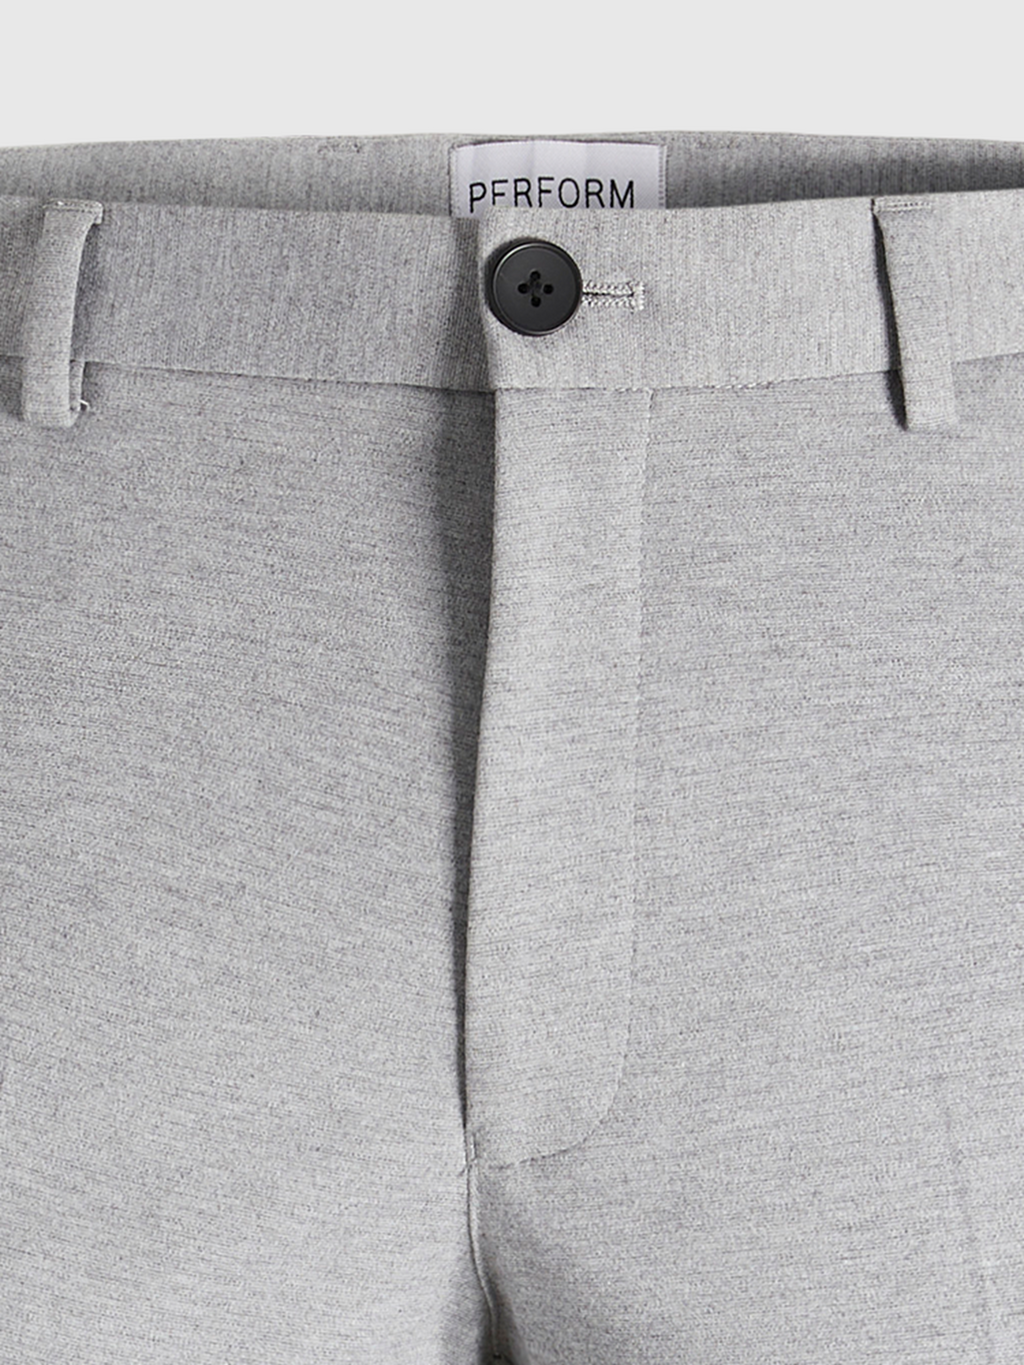 Performance Trousers Kids - Light grey